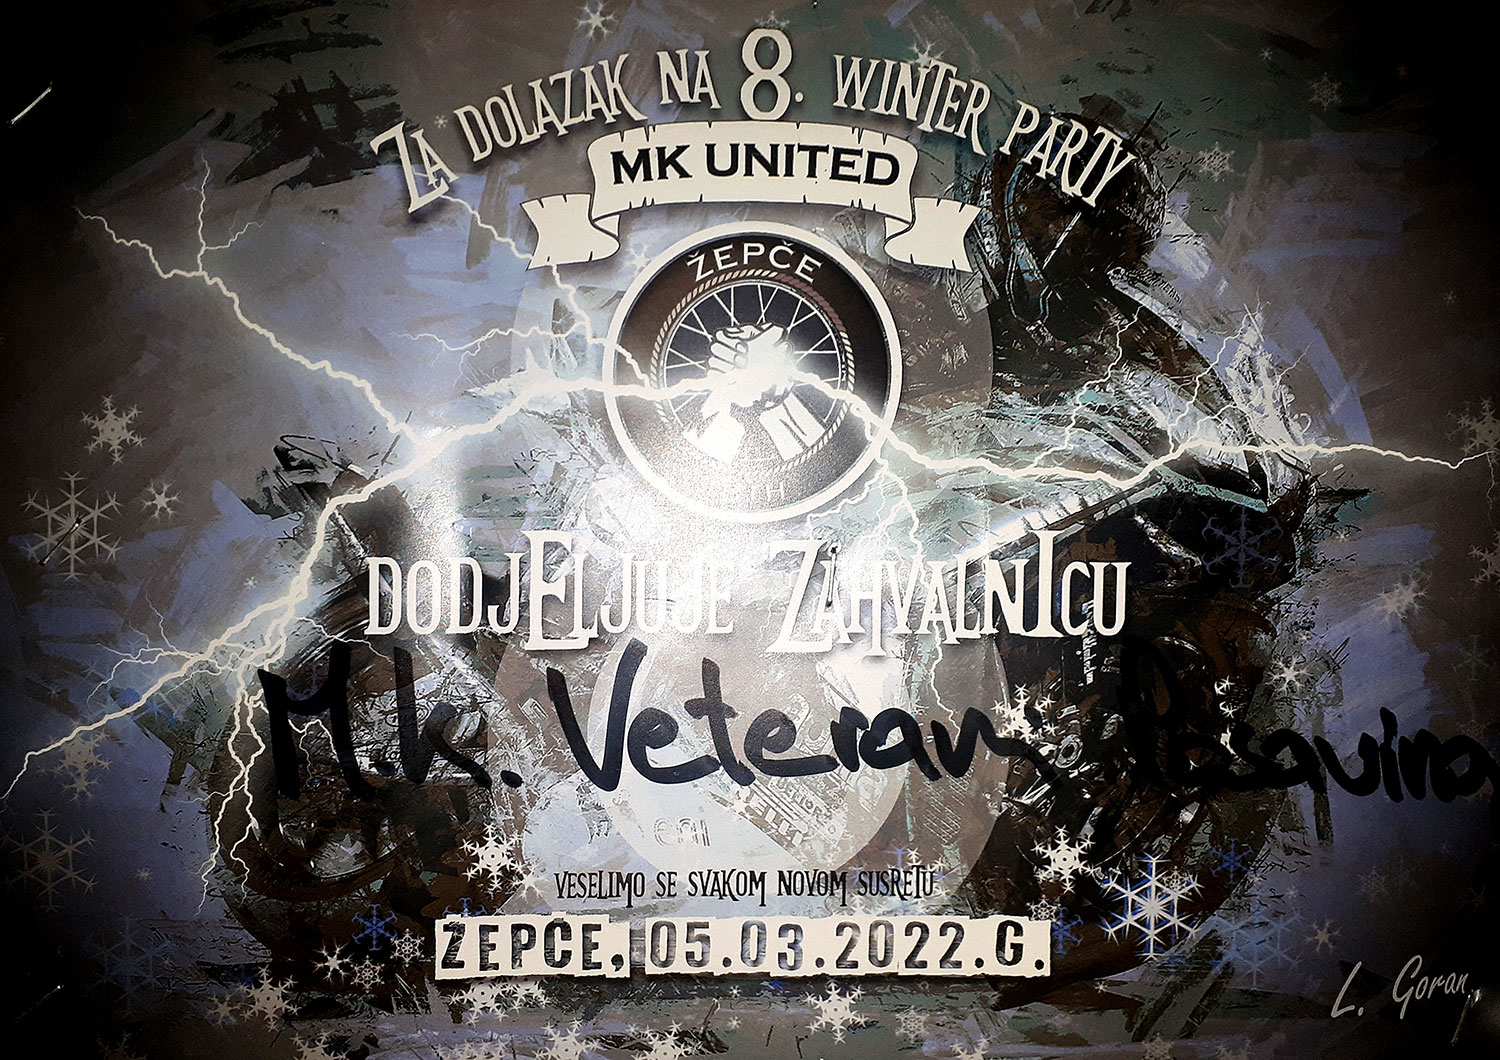 2022 03 05 mk united zepce